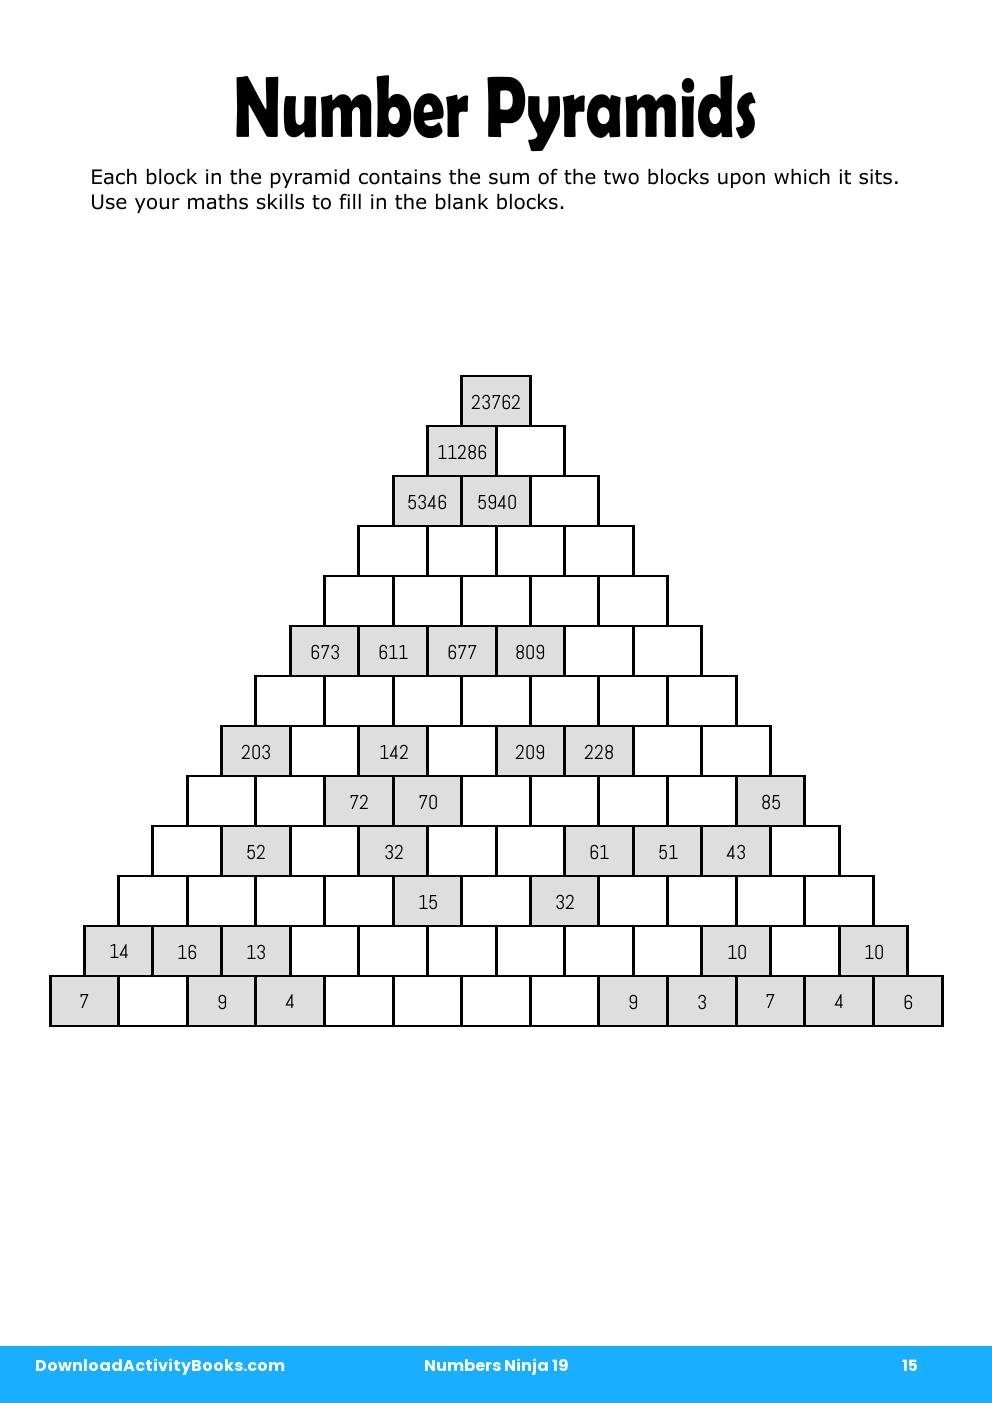 Number Pyramids in Numbers Ninja 19